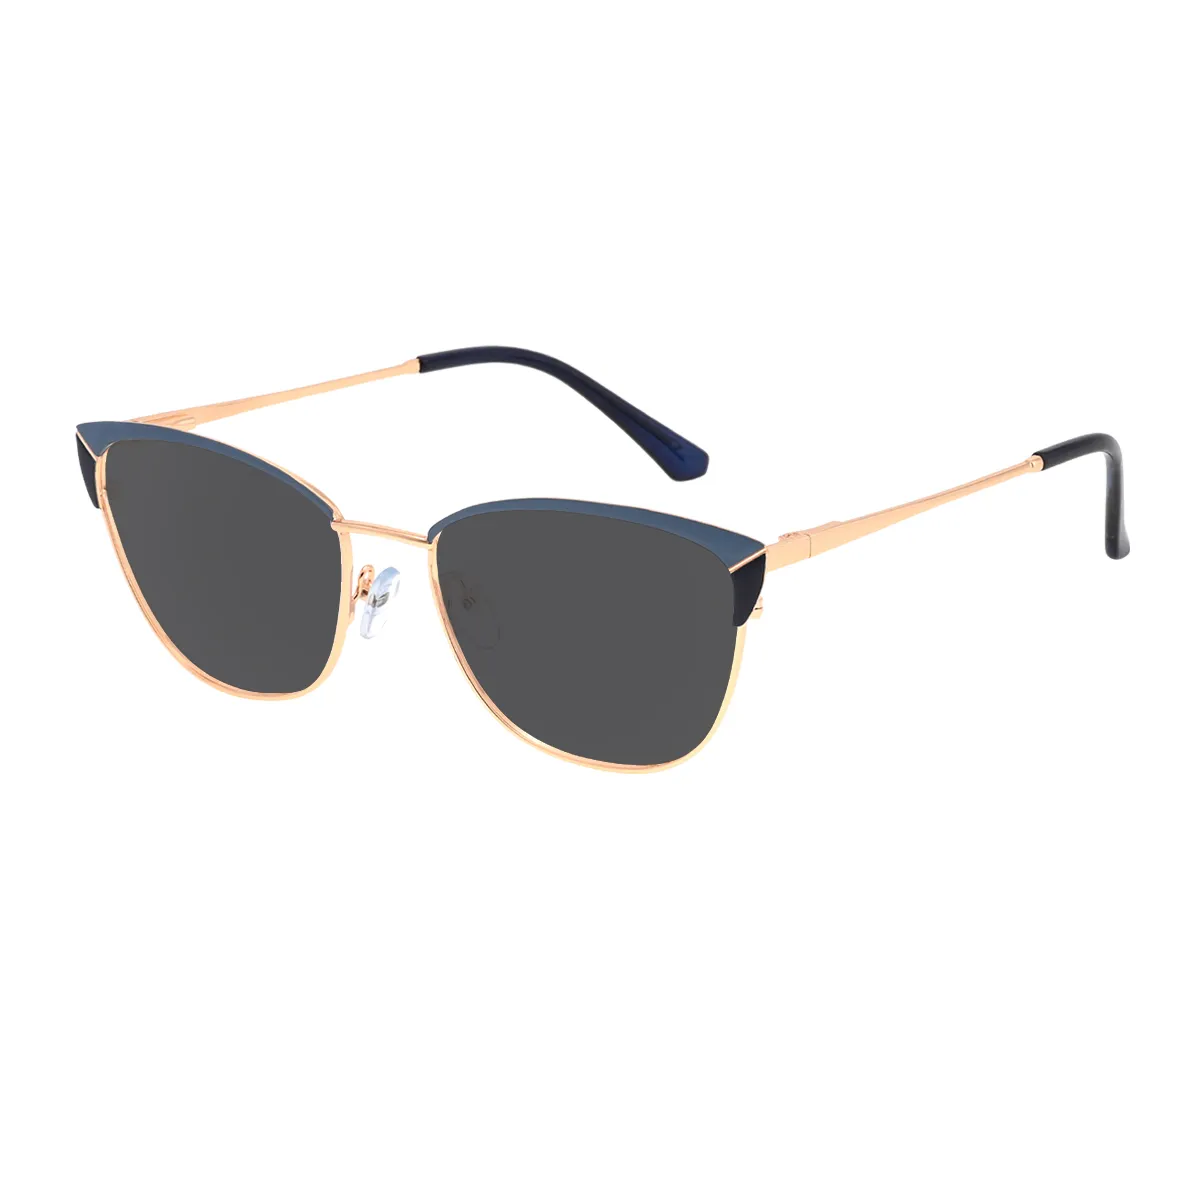 Anstey - Browline Blue Sunglasses for Women